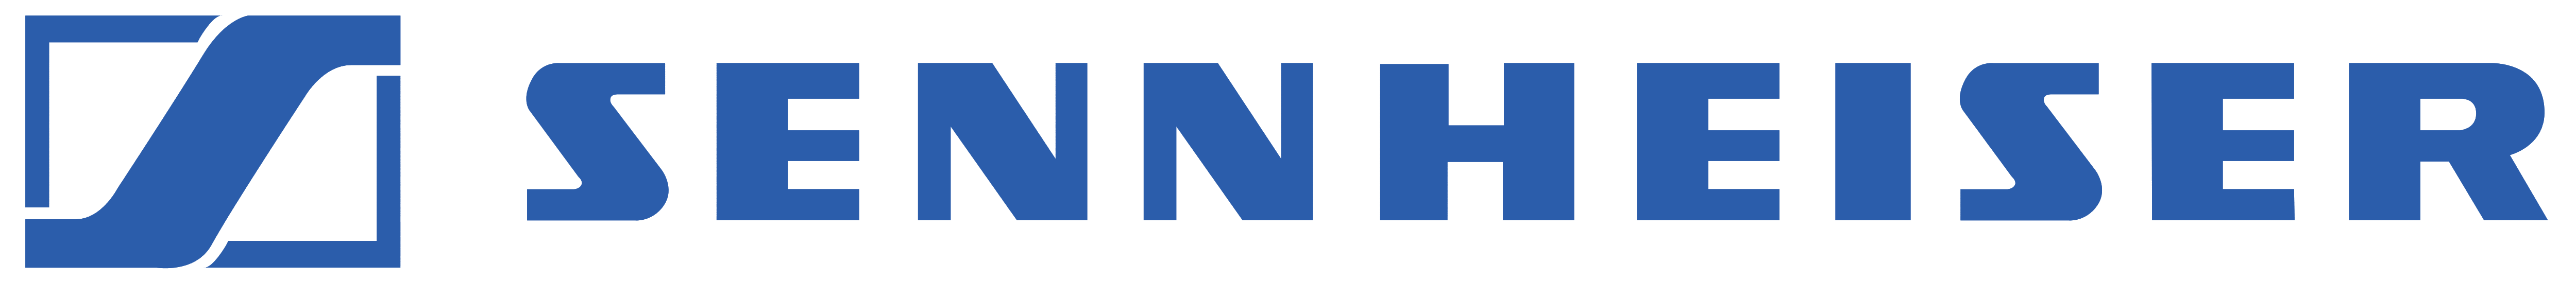 Sennheiser_logo_logotype_wordmark